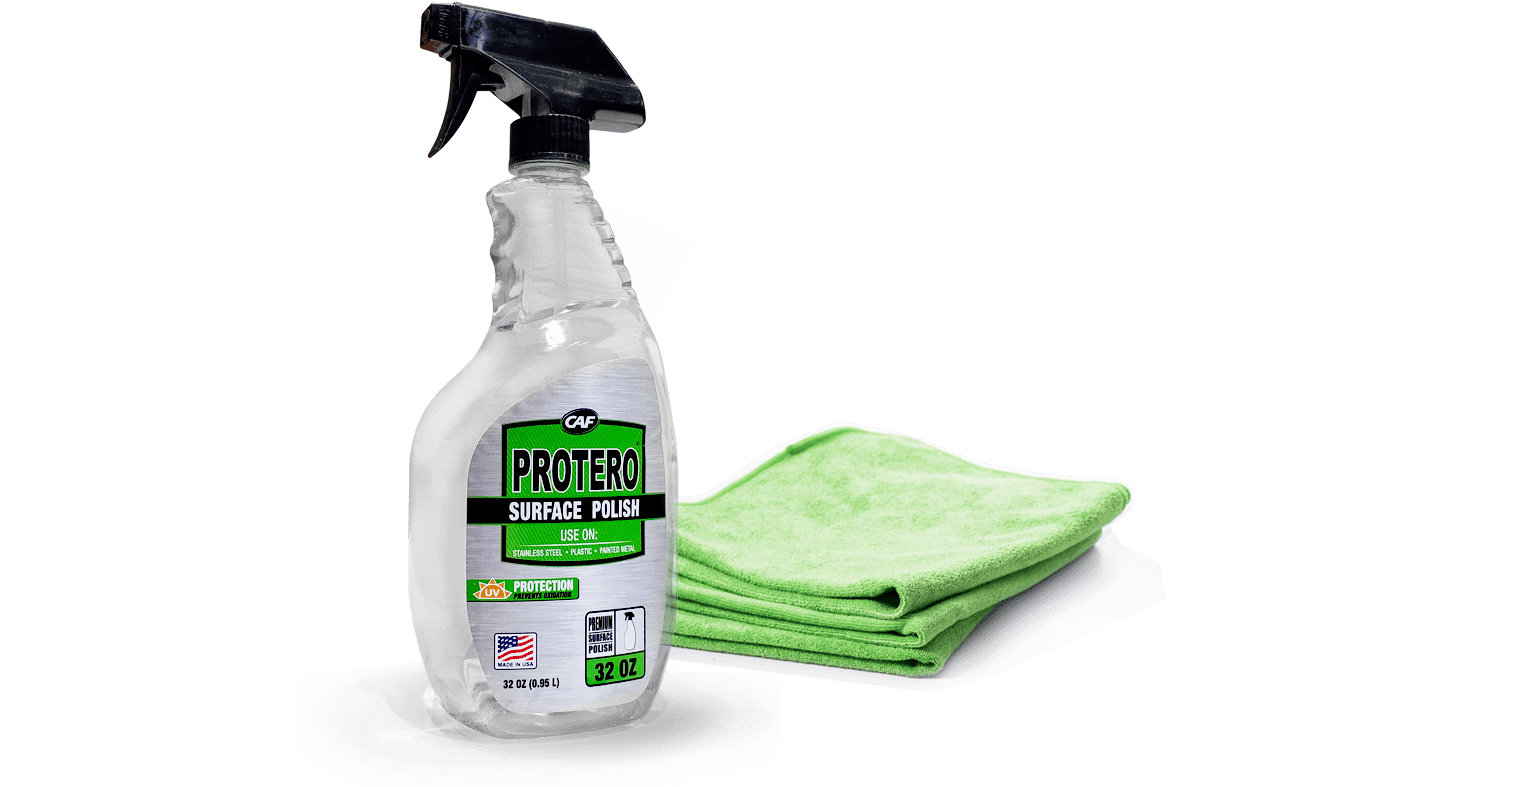 protero bottle and wipe premium surface polish